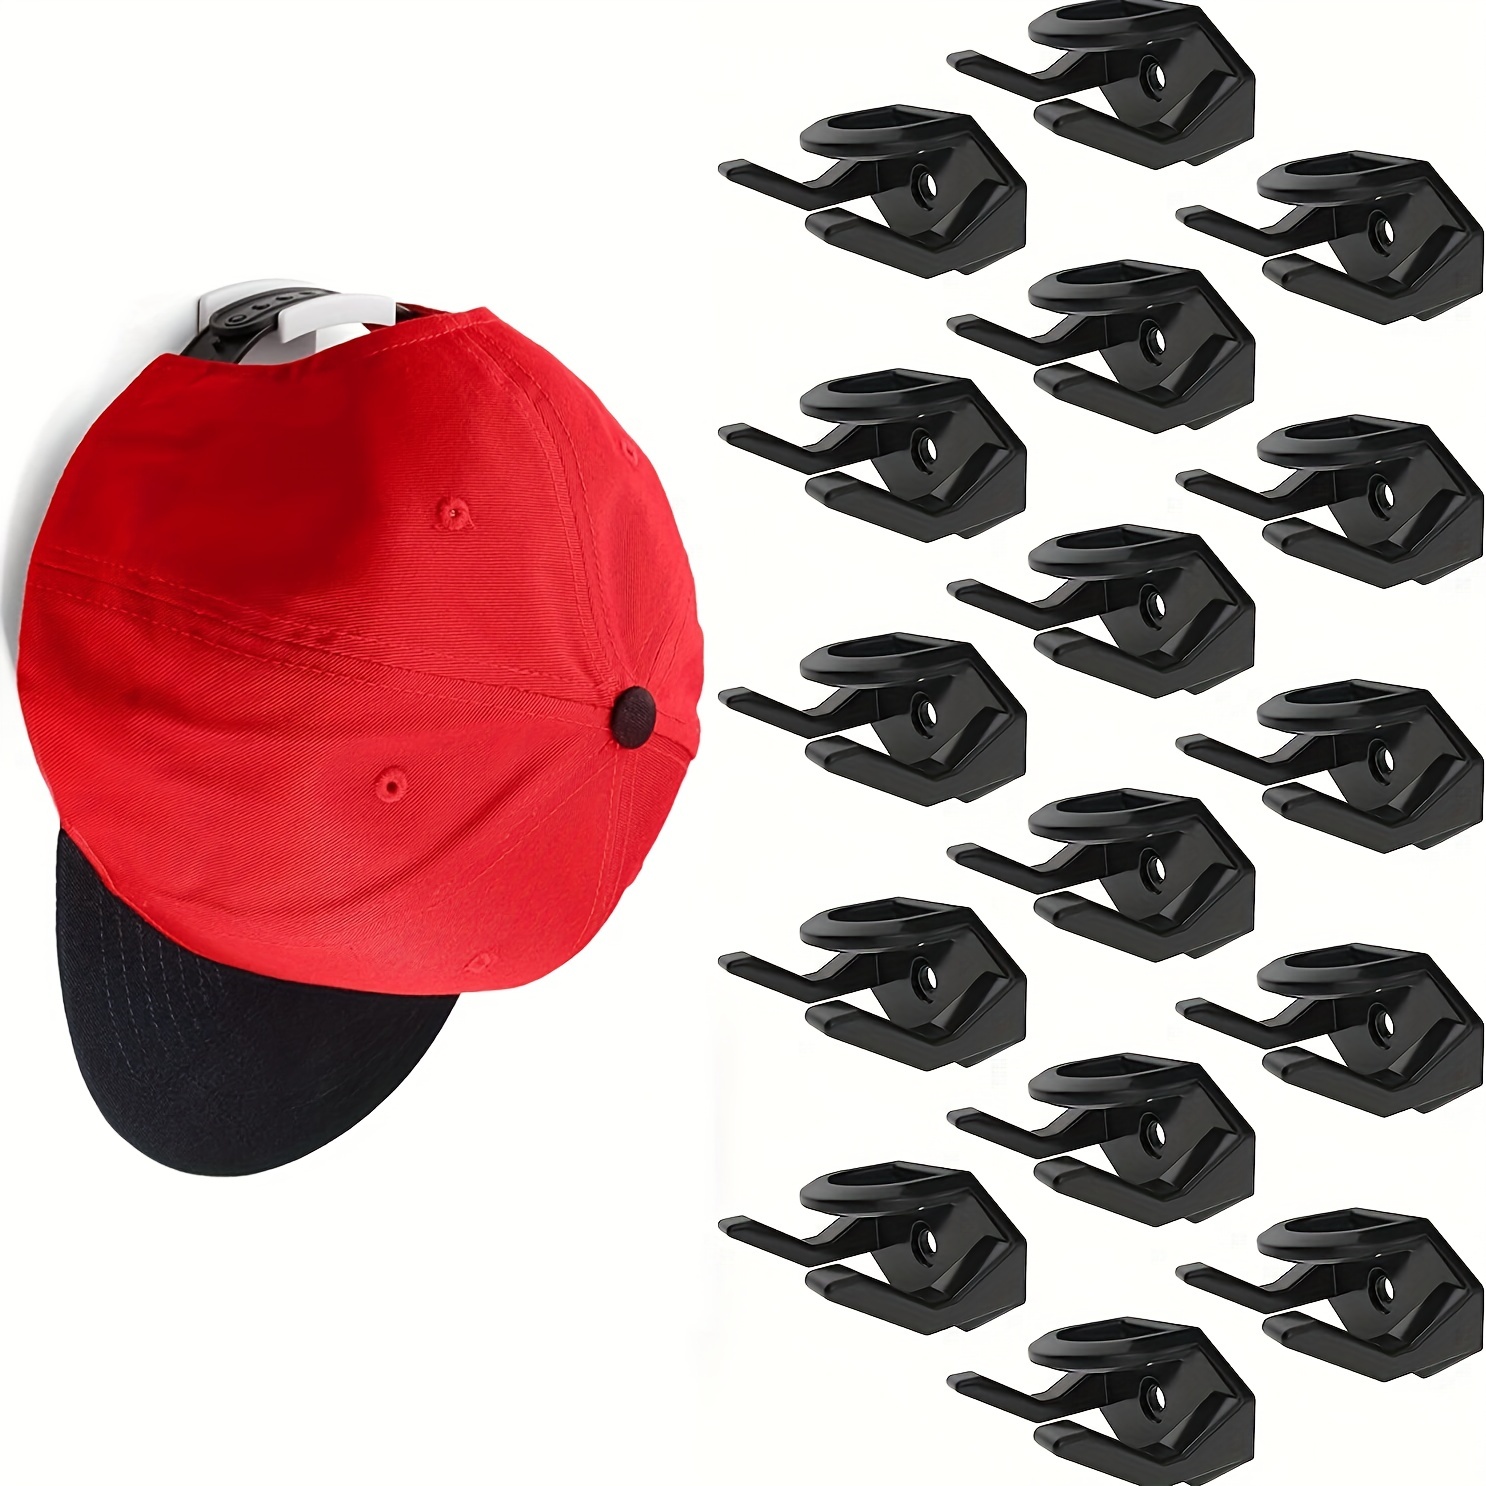 Colgador Gorras Adhesivo Montado en Pared, Paquete de 10 Ganchos  Minimalistas Negros Organizador Gorras Gancho de Plástico para Sombreros  con 2